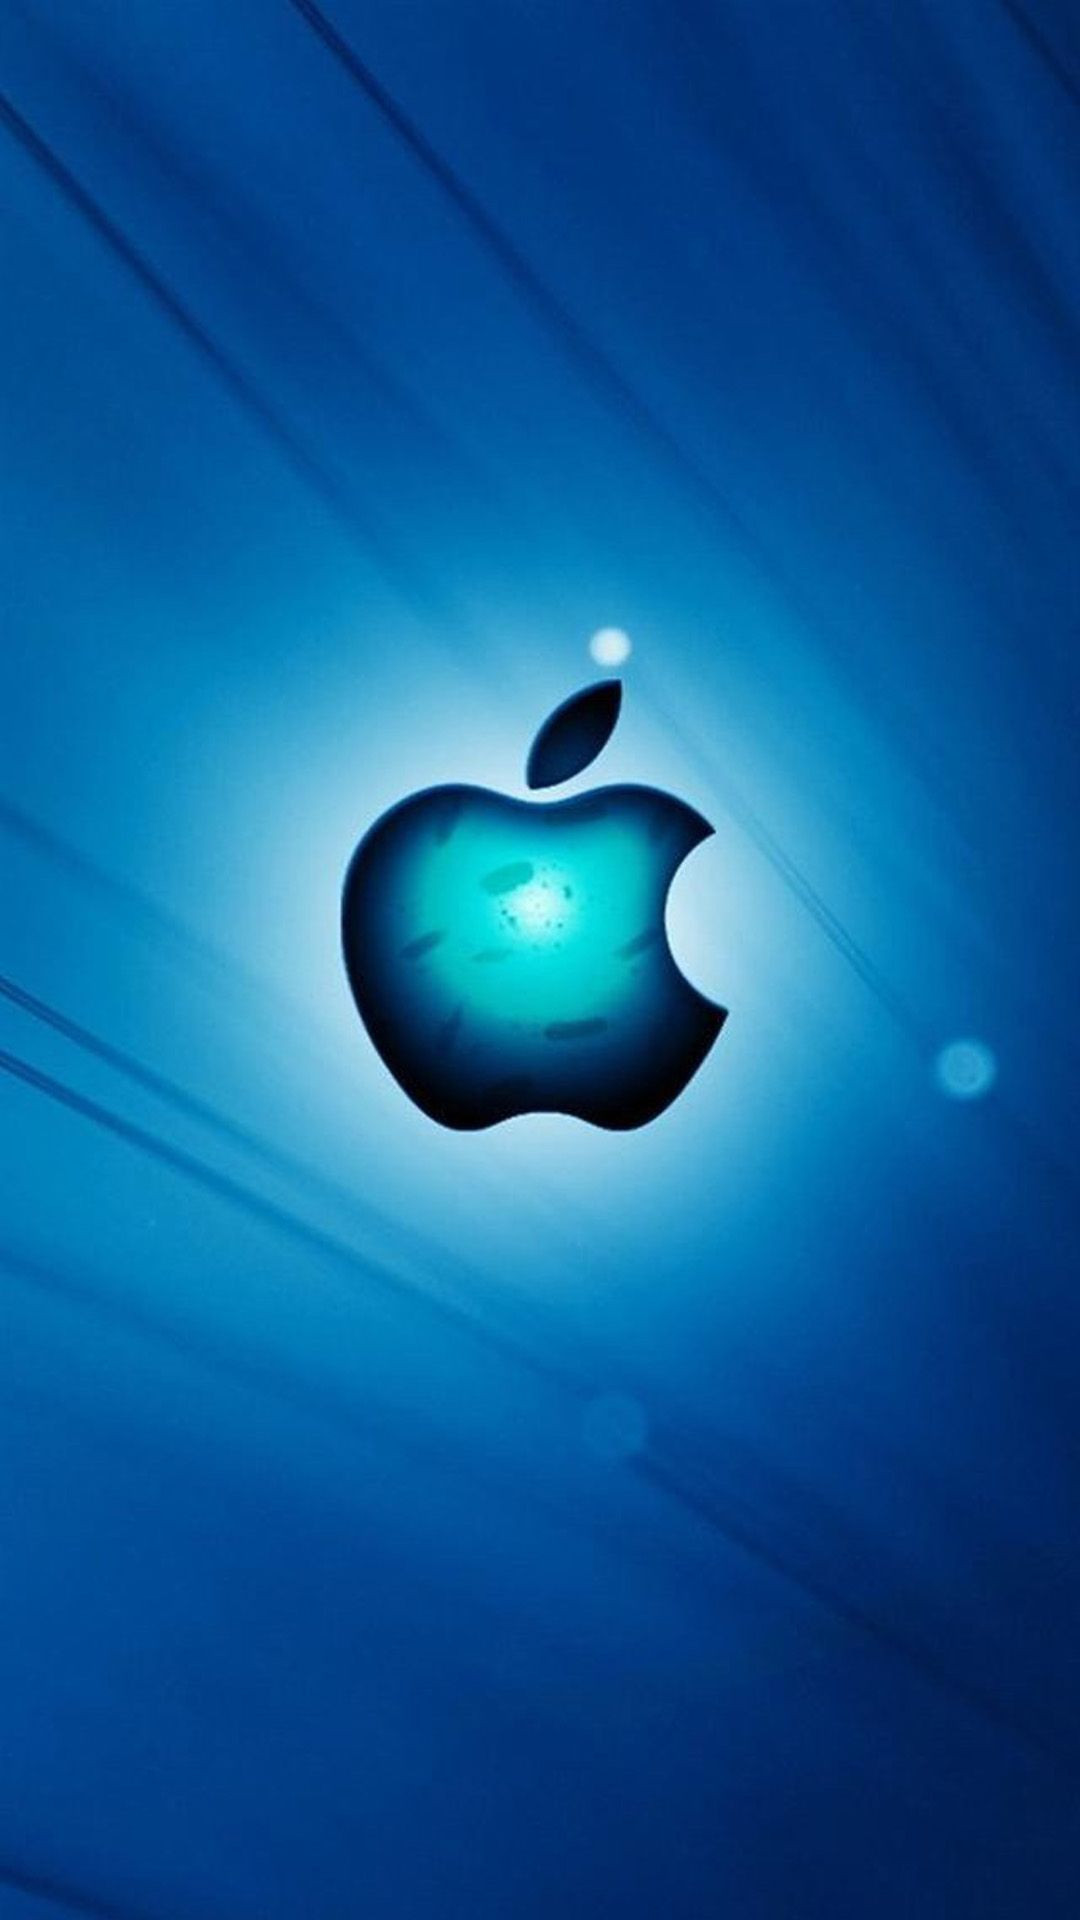 1080x1920 Apple iPhone Mobile Wallpaper New D Apple Logo iPhone Wallpaper iPod  Wallpaper Hd Free